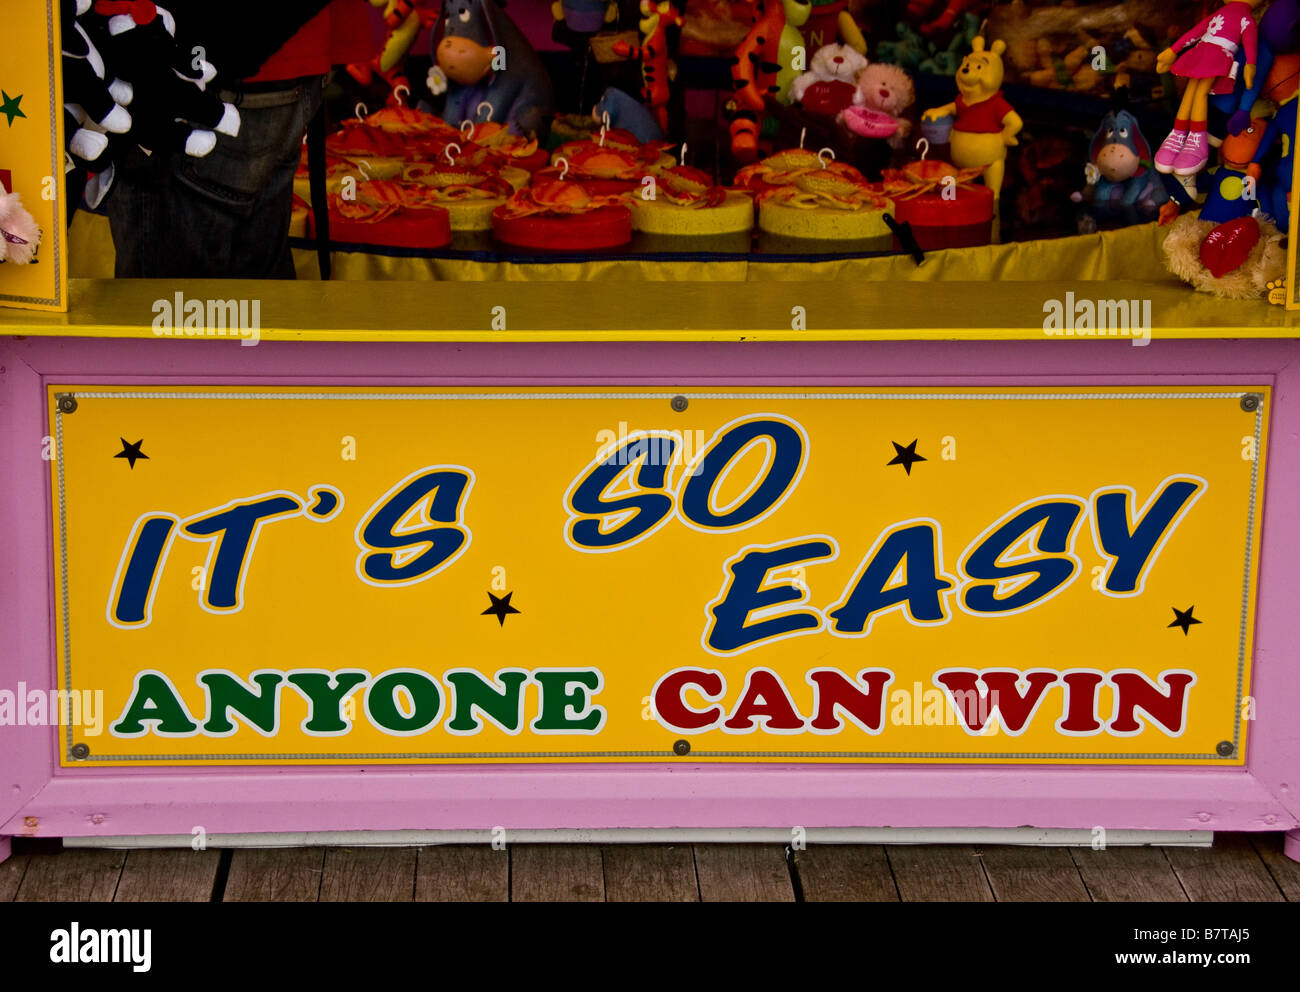 it's so easy anyone can win sign on seaside amusements. Llandudno. Wales Stock Photo